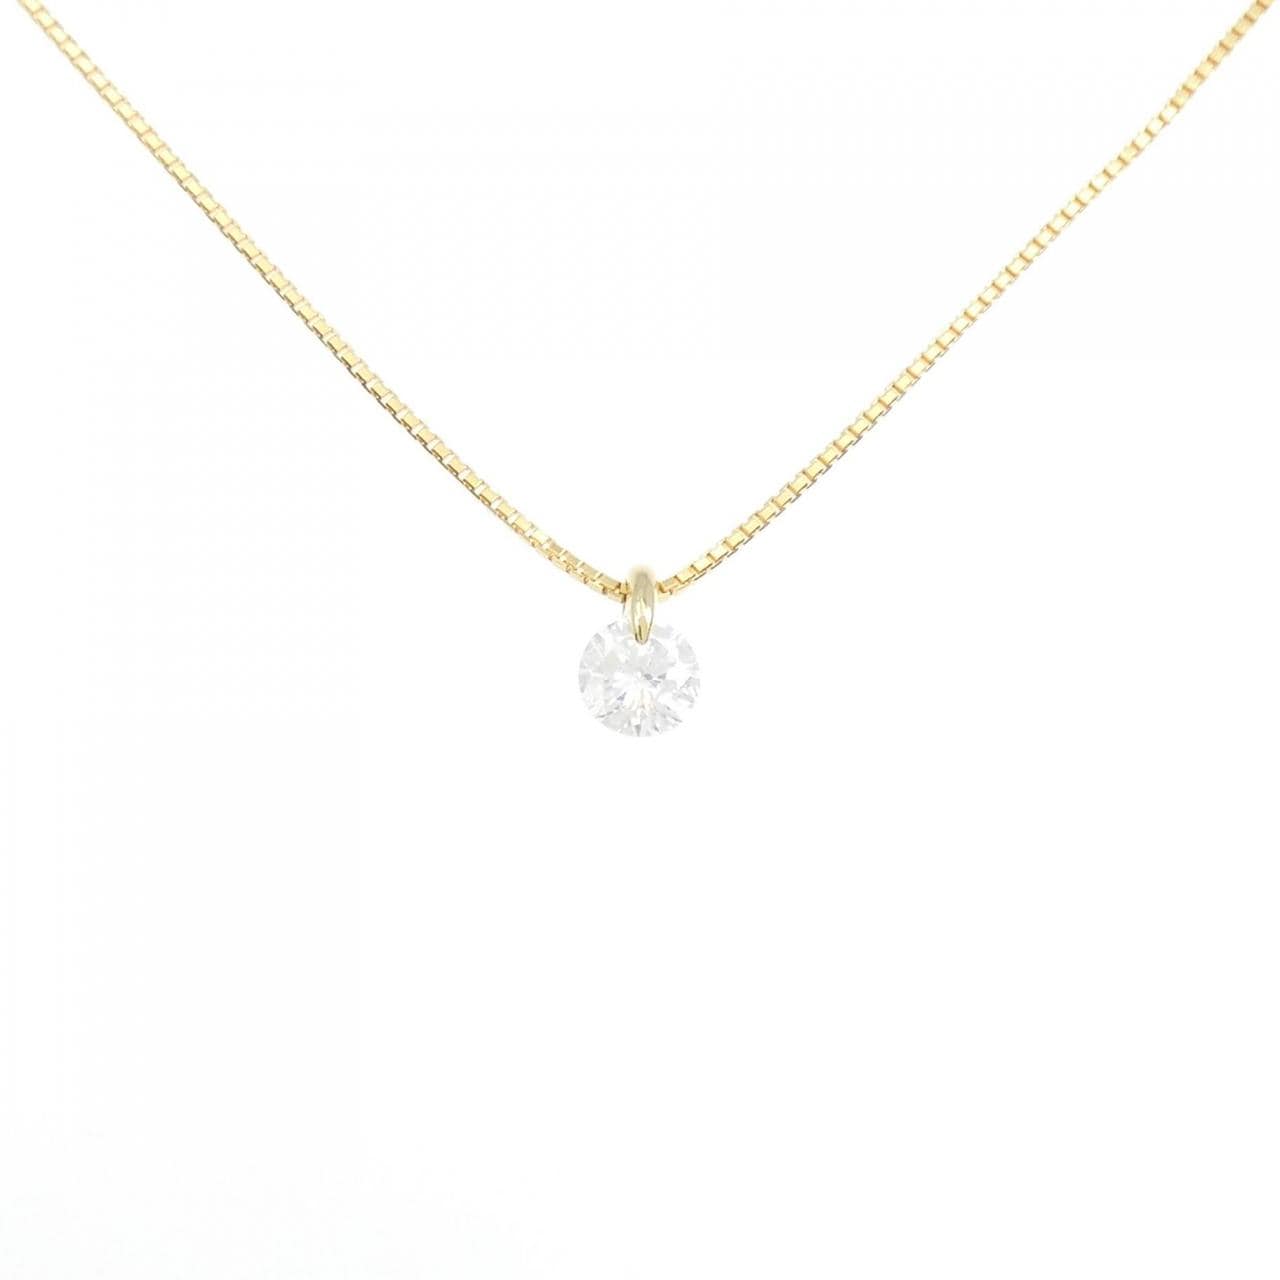 K18YG Solitaire Diamond Necklace 0.54CT